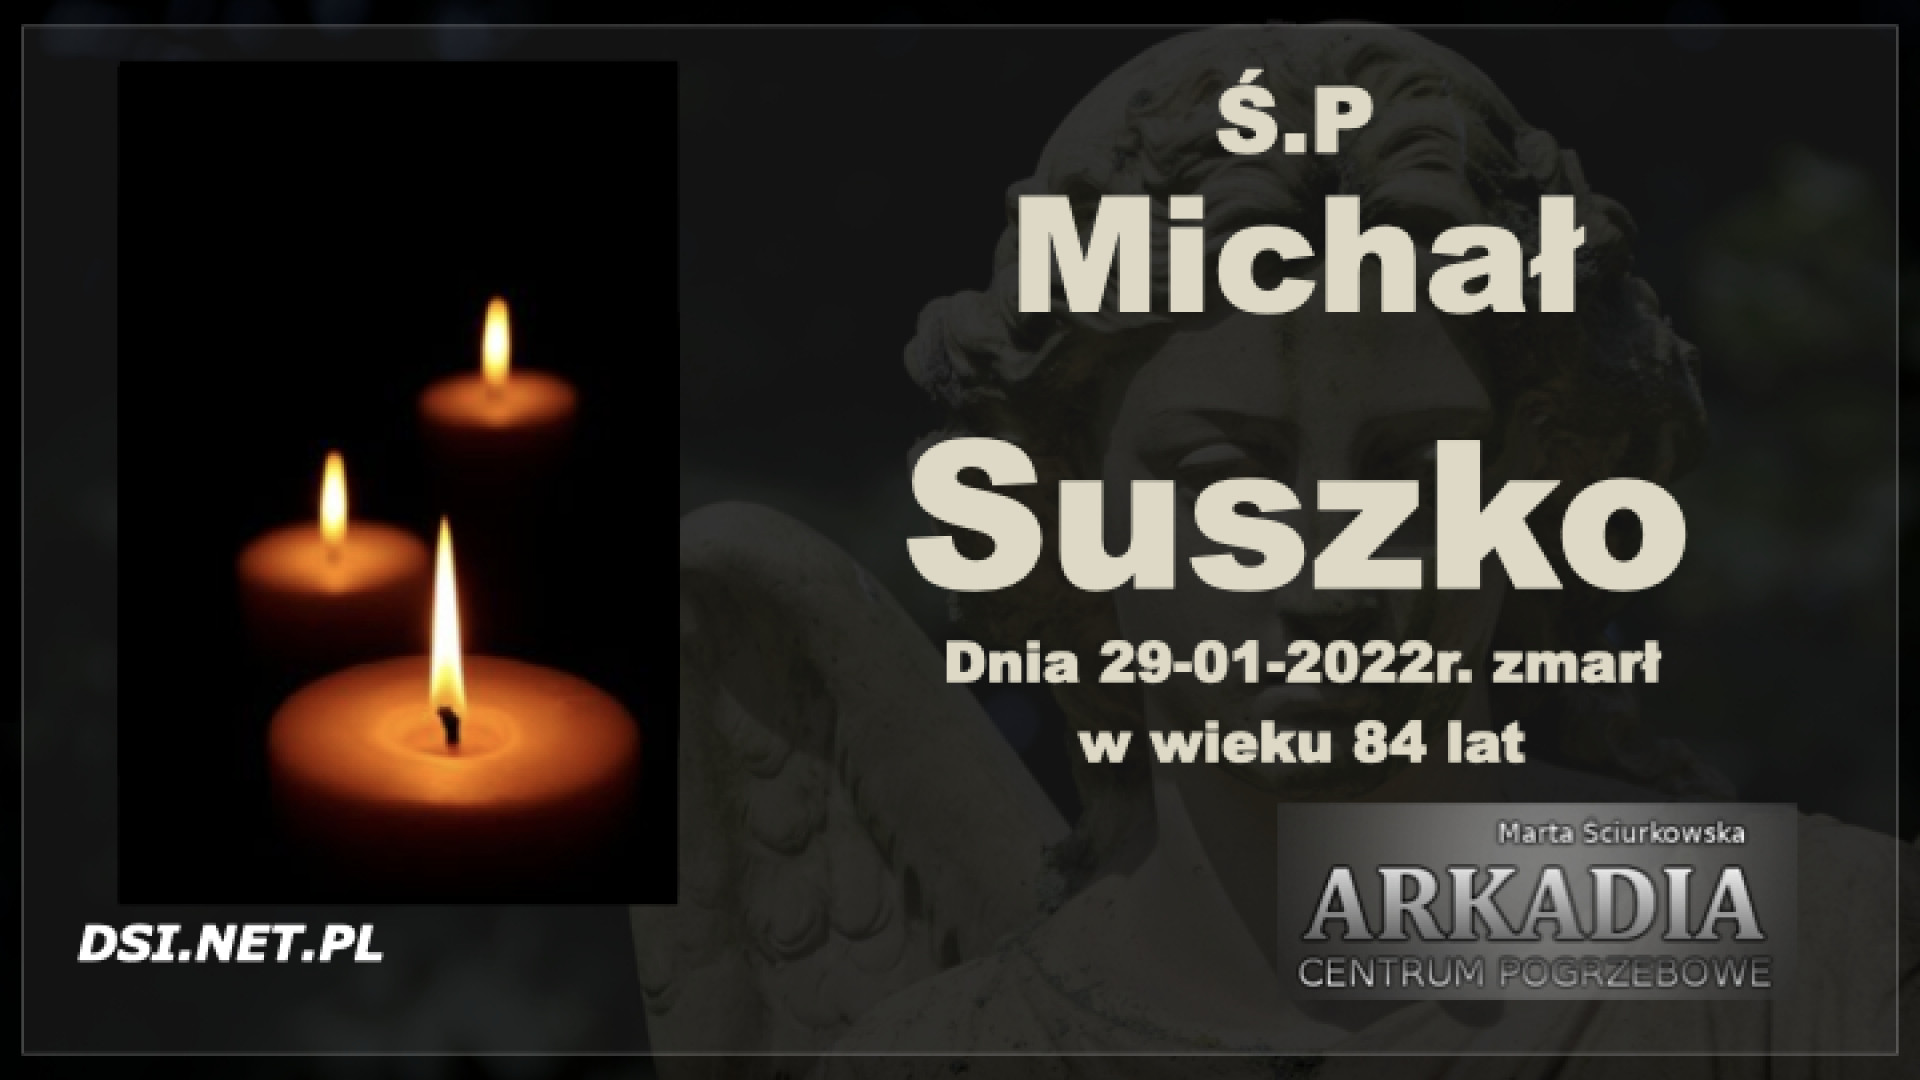 Ś.P. Michał Suszko